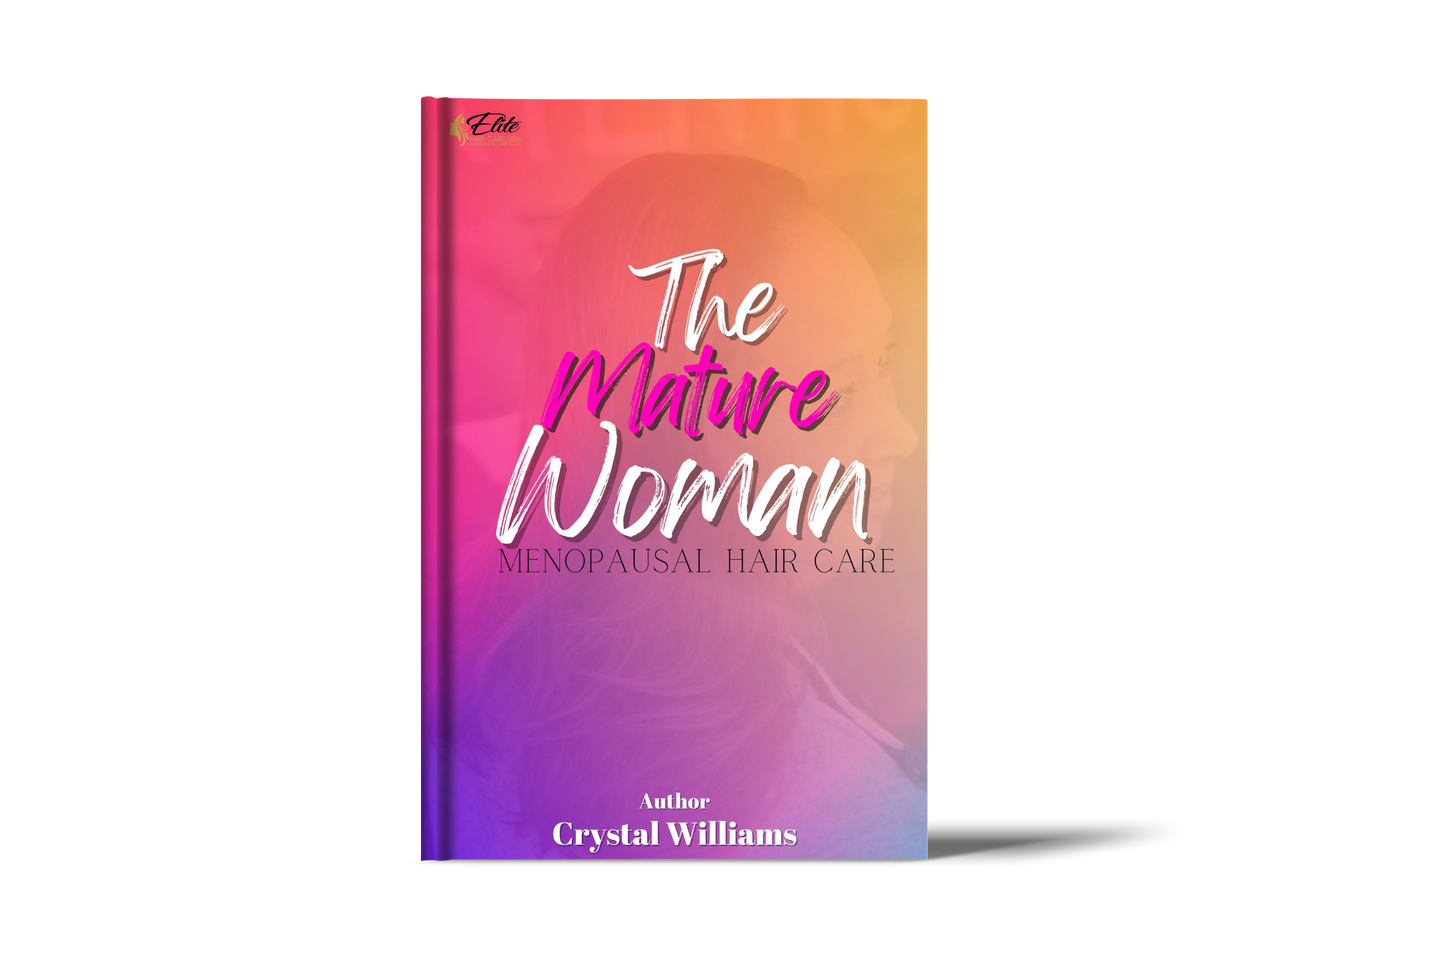 The Mature Woman- Menopausal Hair Care